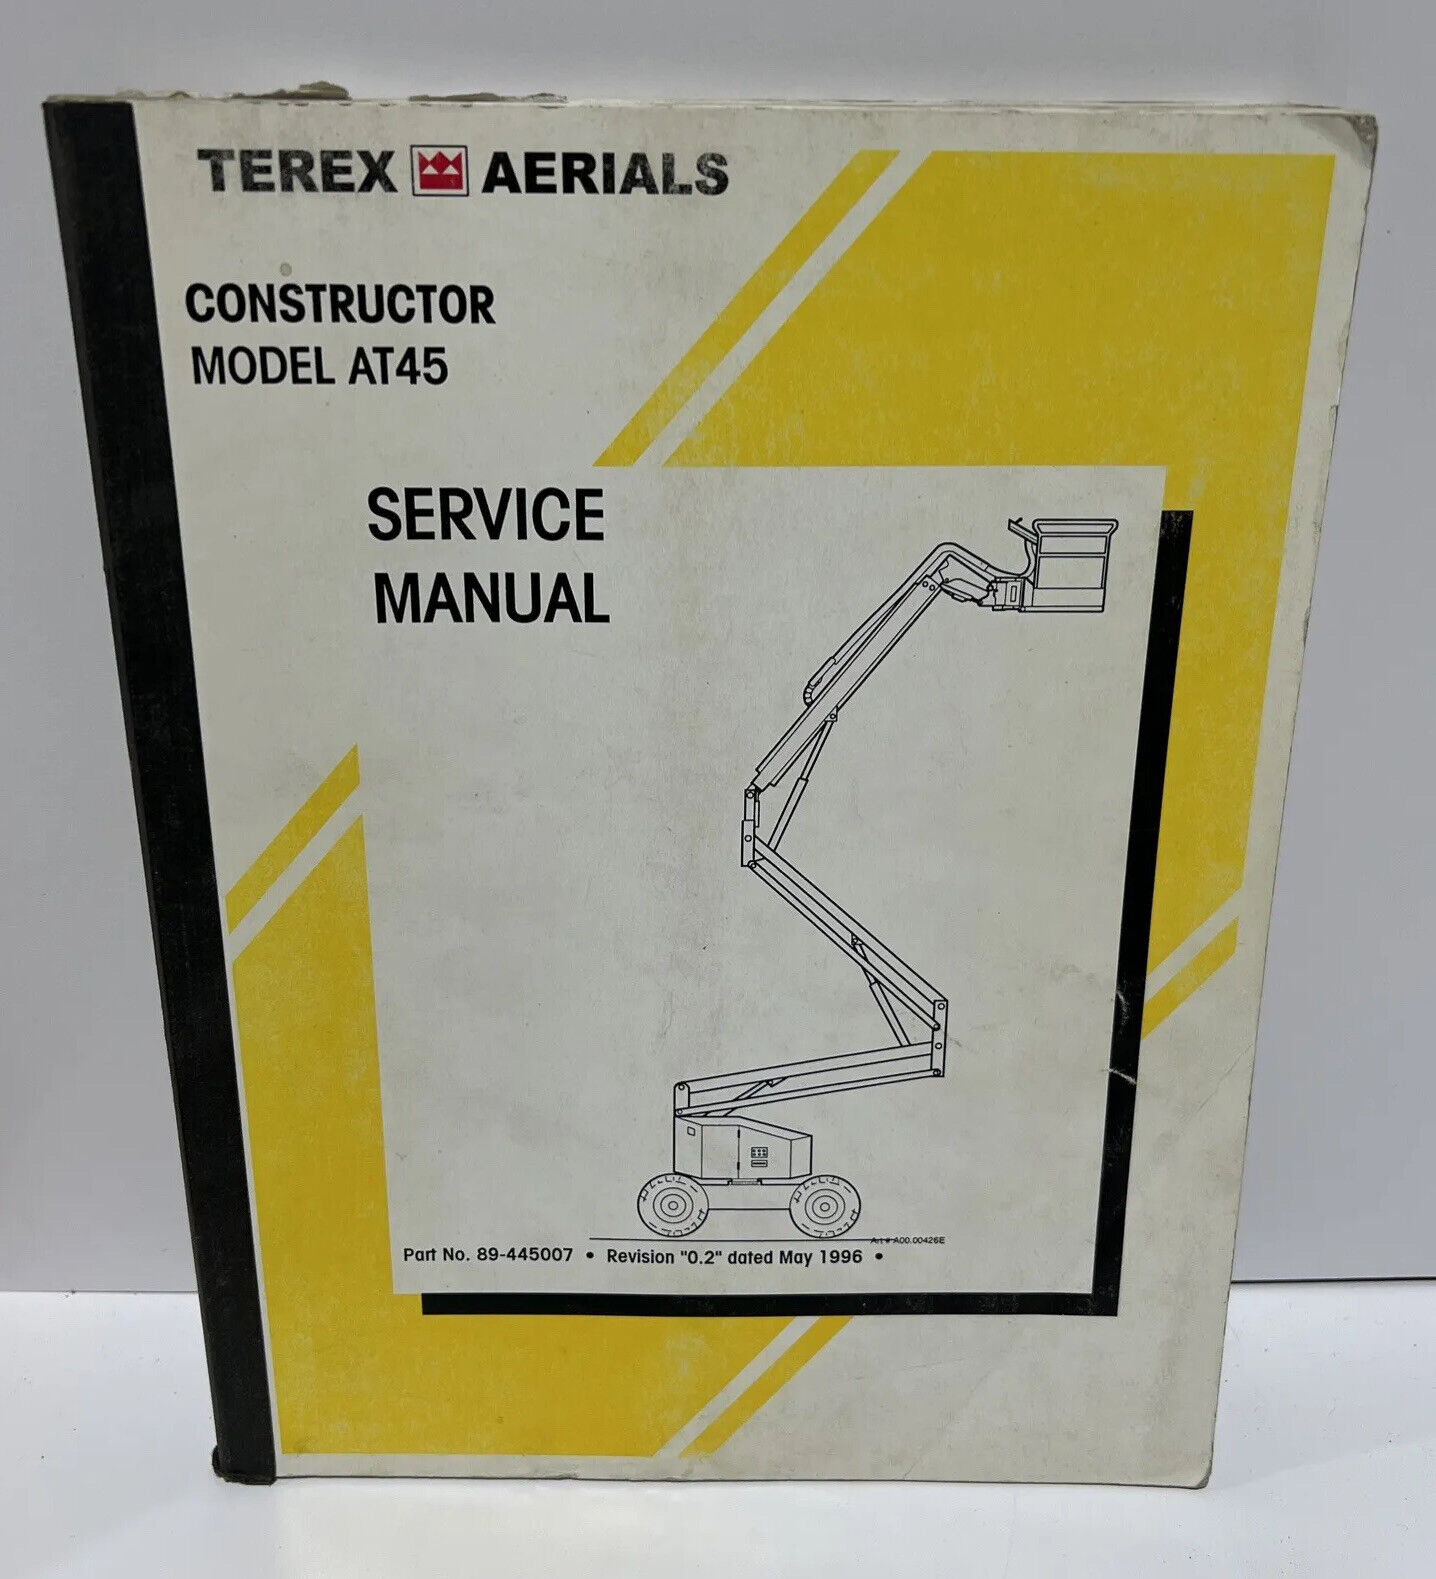 Terex Aerials Constructor Model AT45 Service Manual Rev 0.2 May 1996 #89-445007